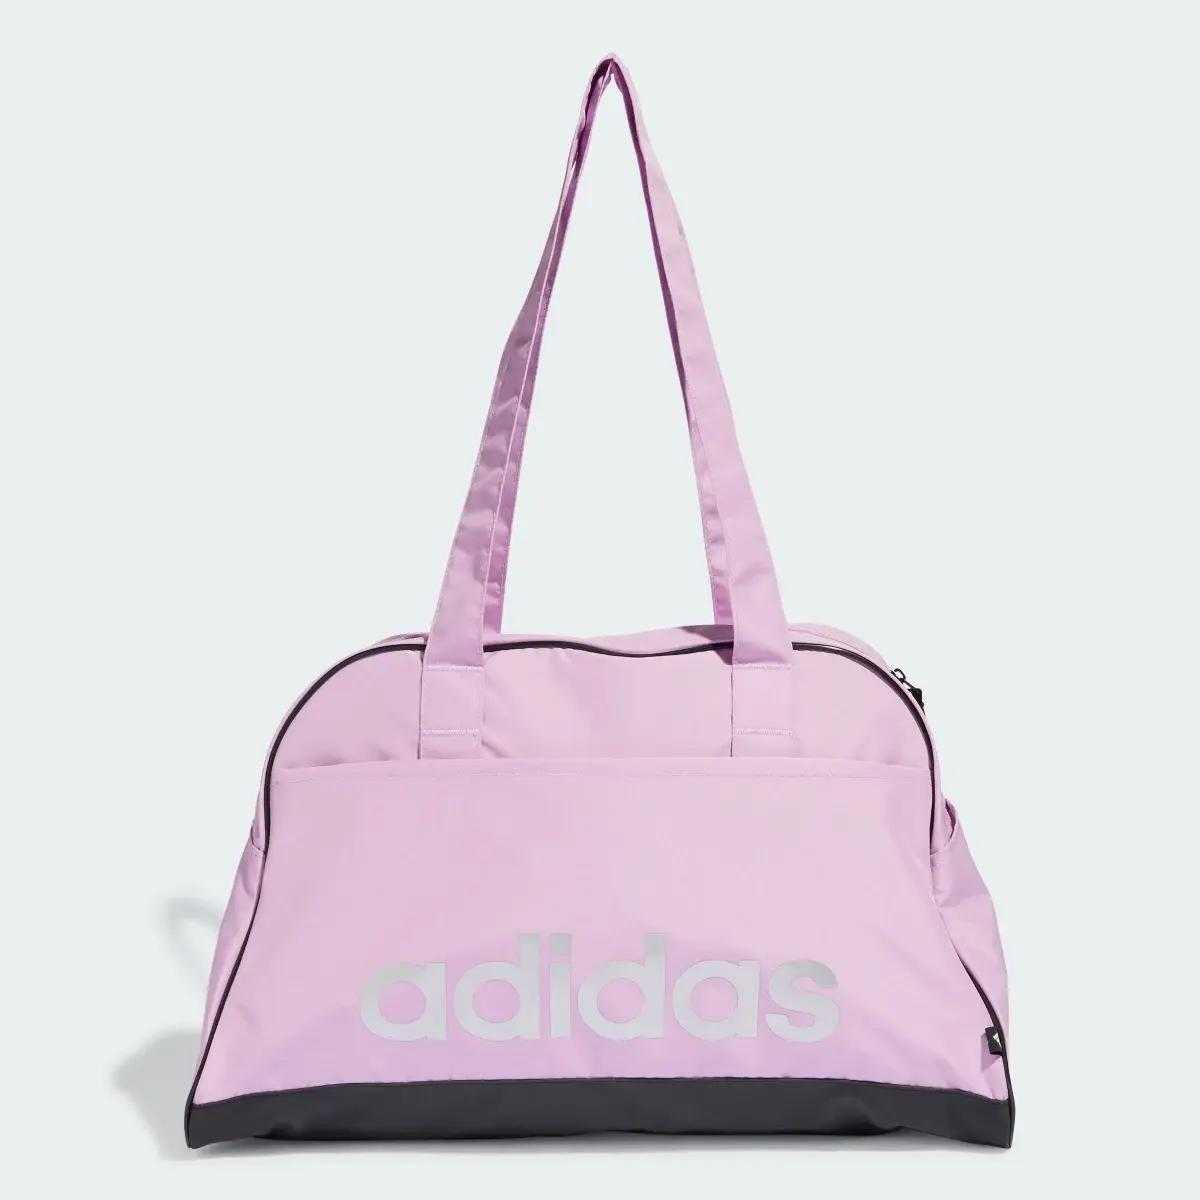 Adidas Essentials Linear Bowling Bag. 1